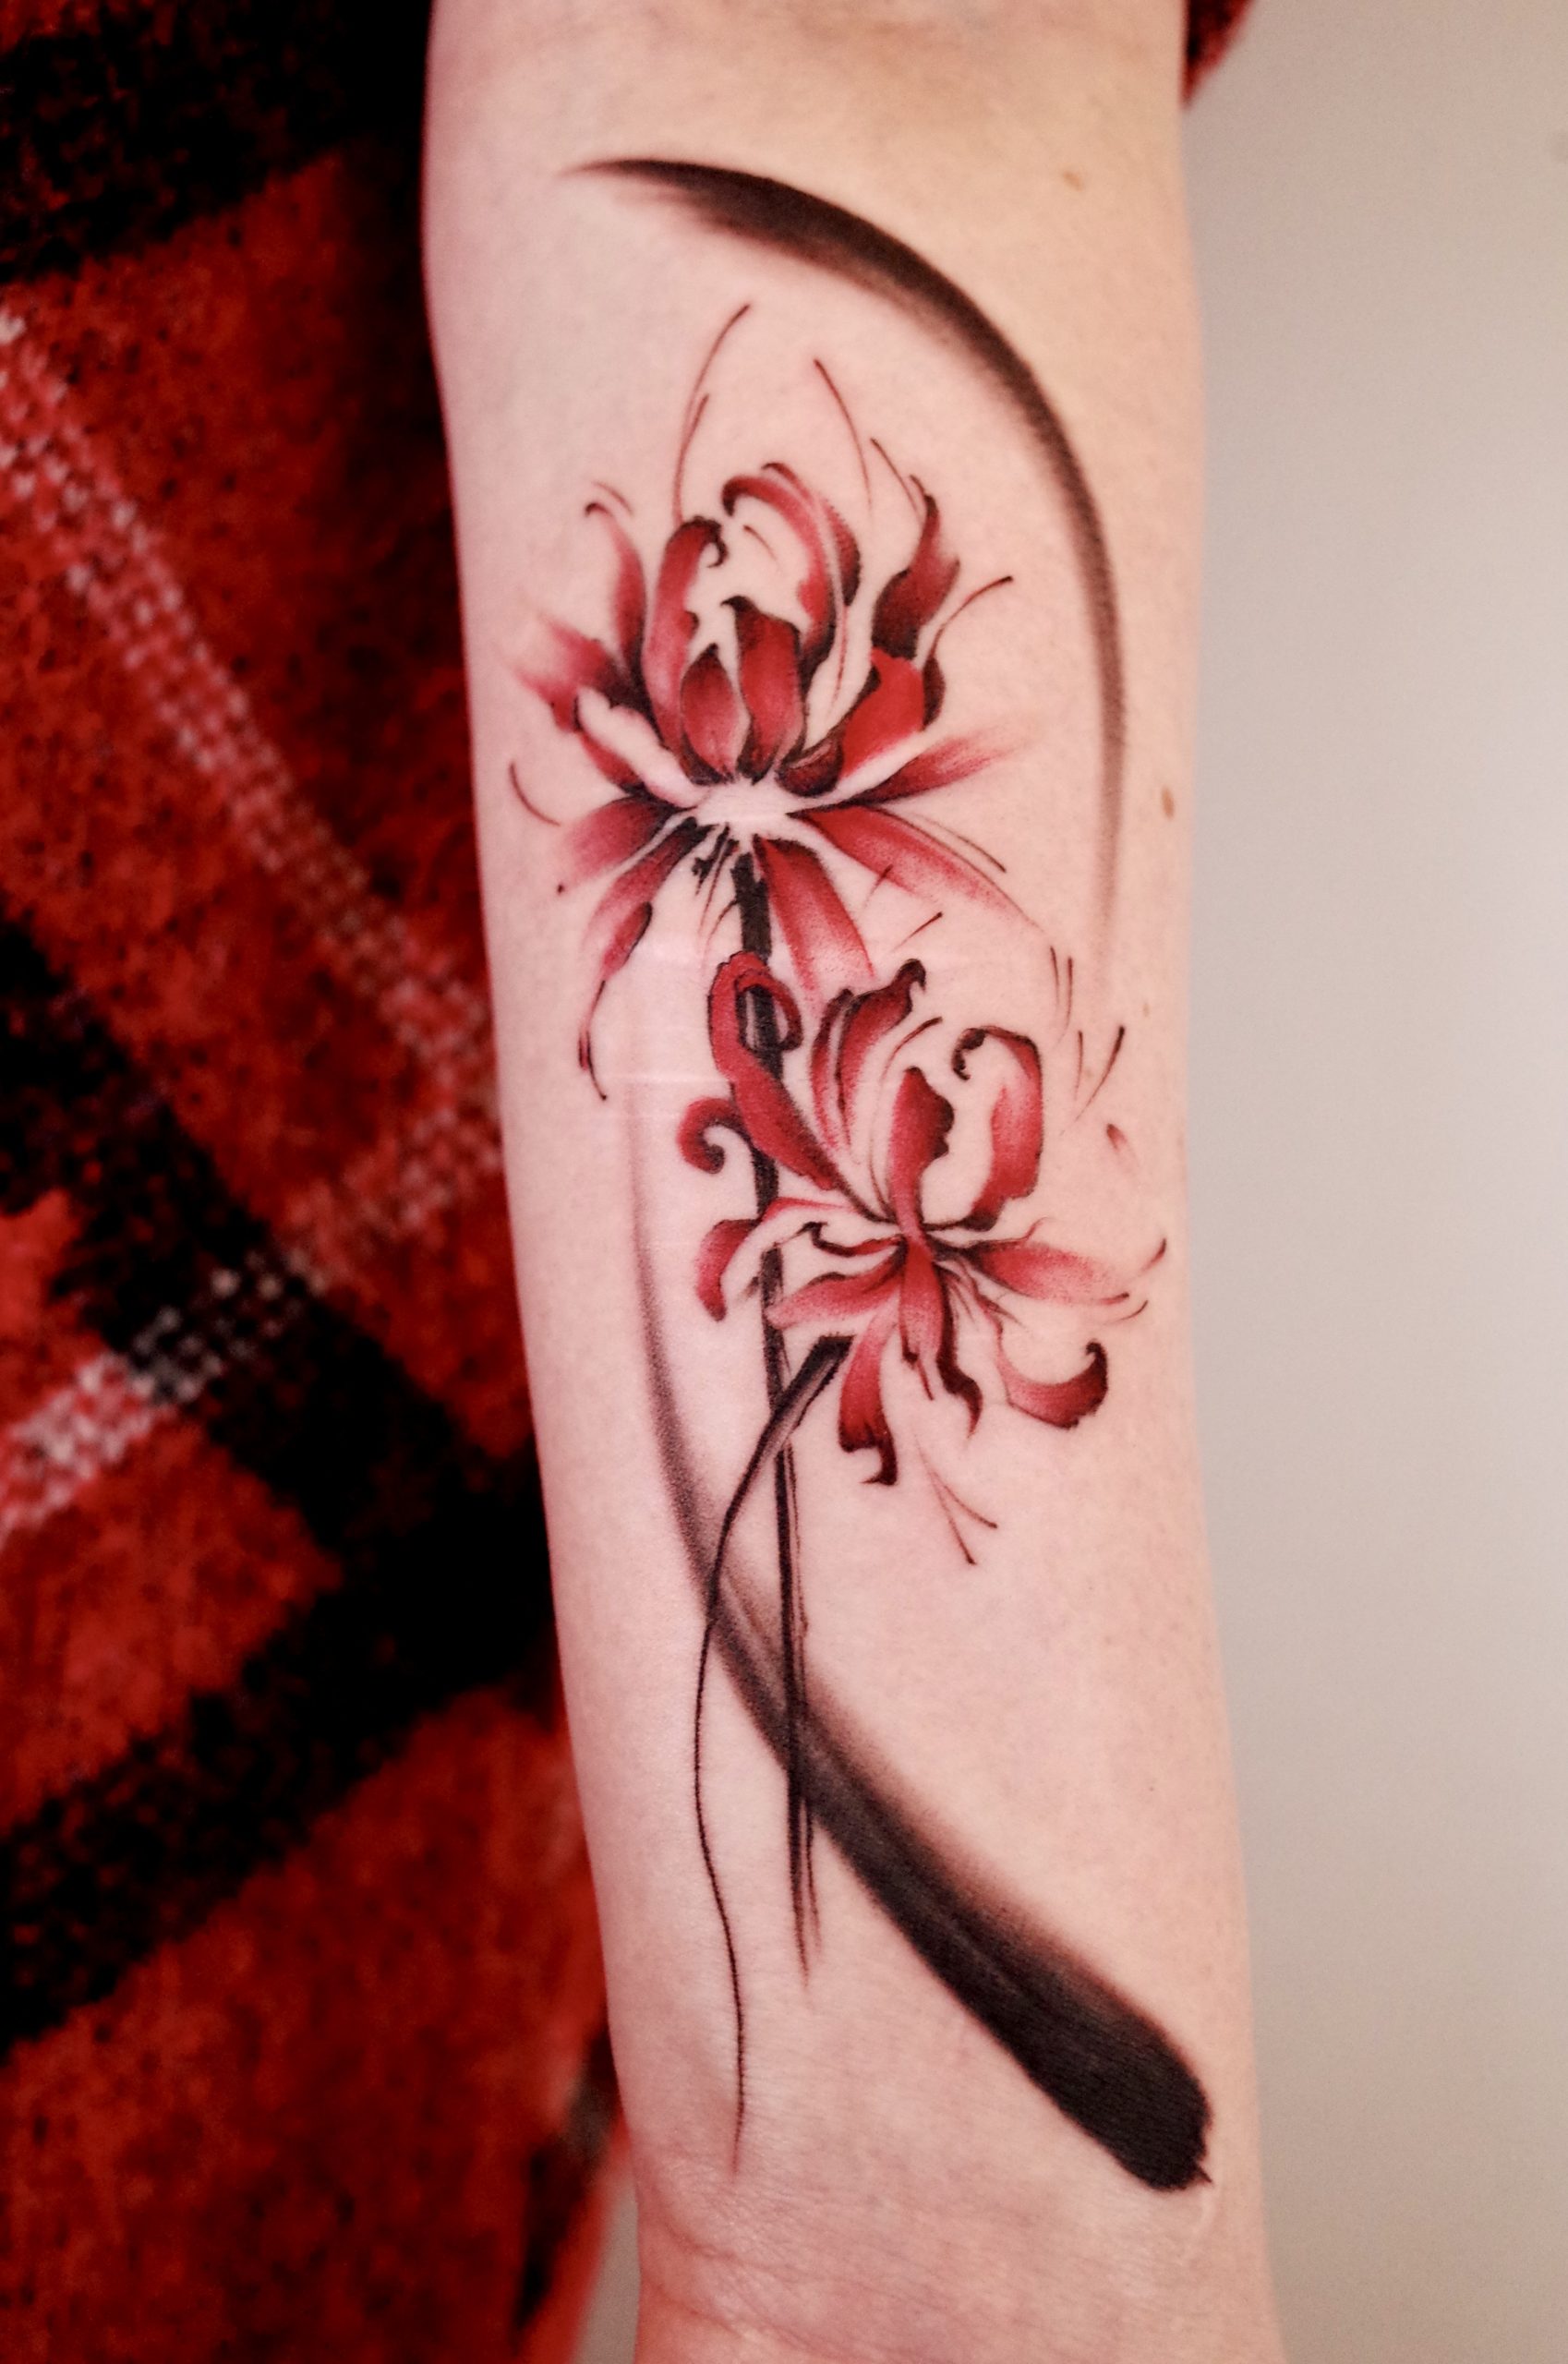 Tattoo artist – Things&Ink